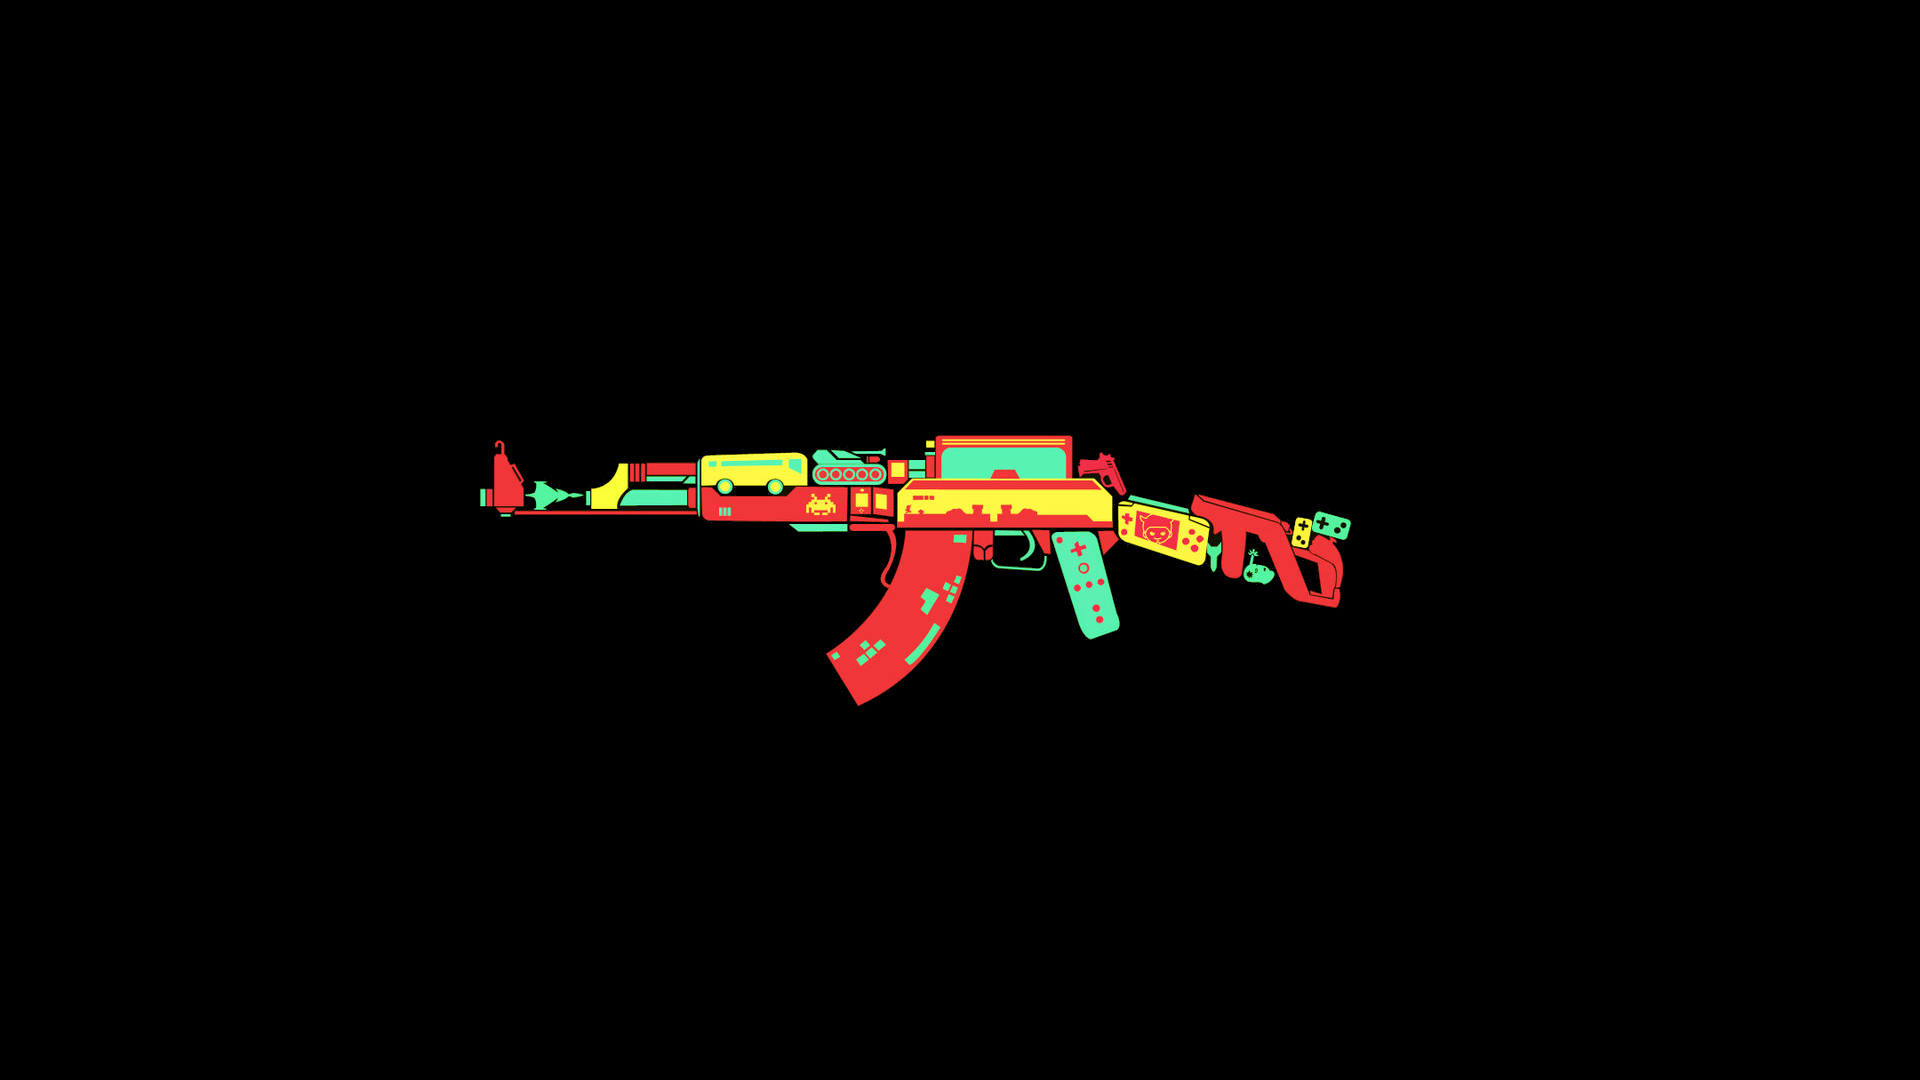 General 1920x1080 gun colorful black background AK-47 rifles video game art controllers collage